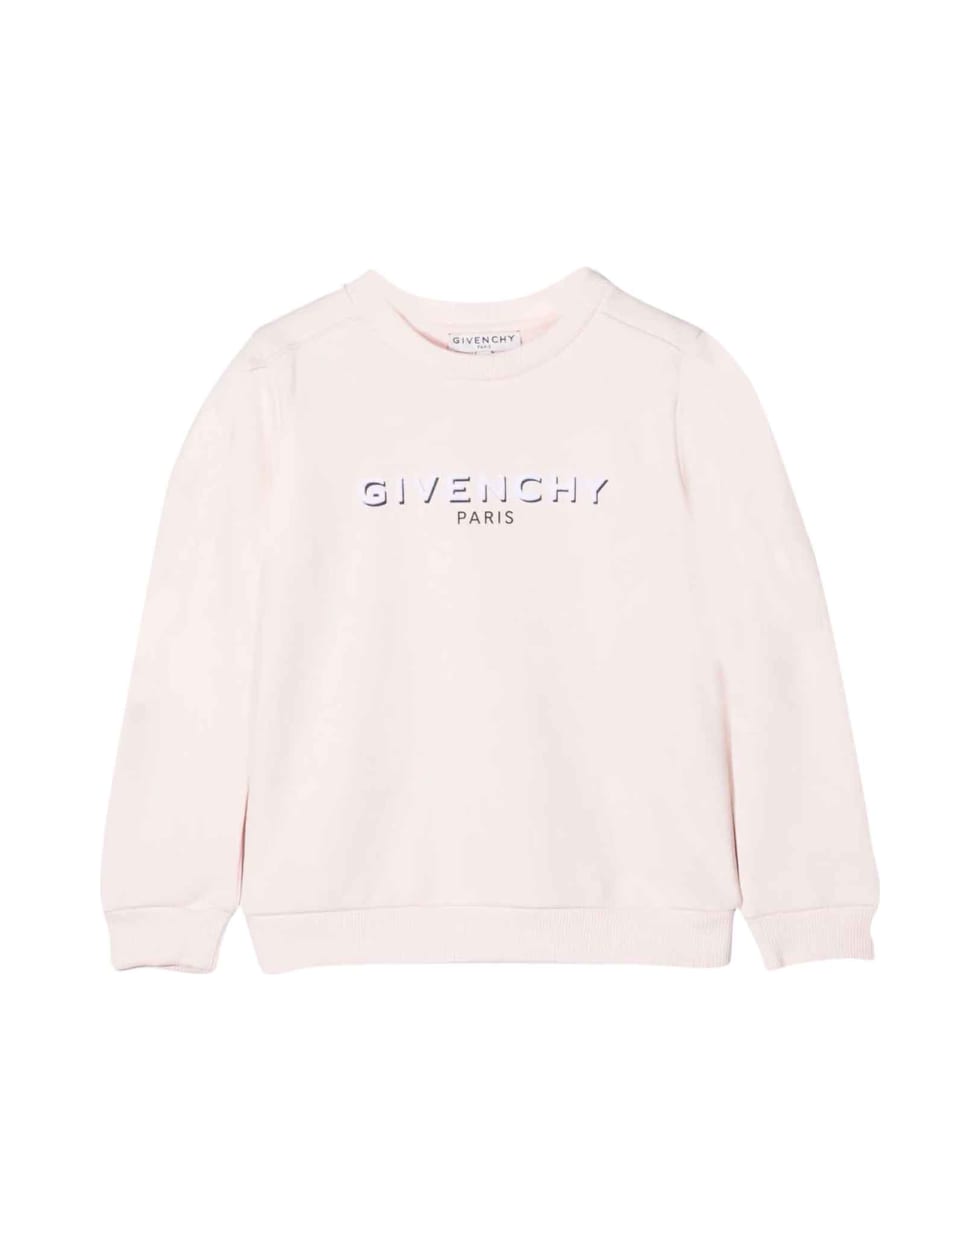 Givenchy Unisex Pink Sweatshirt - S Rosa Pallido